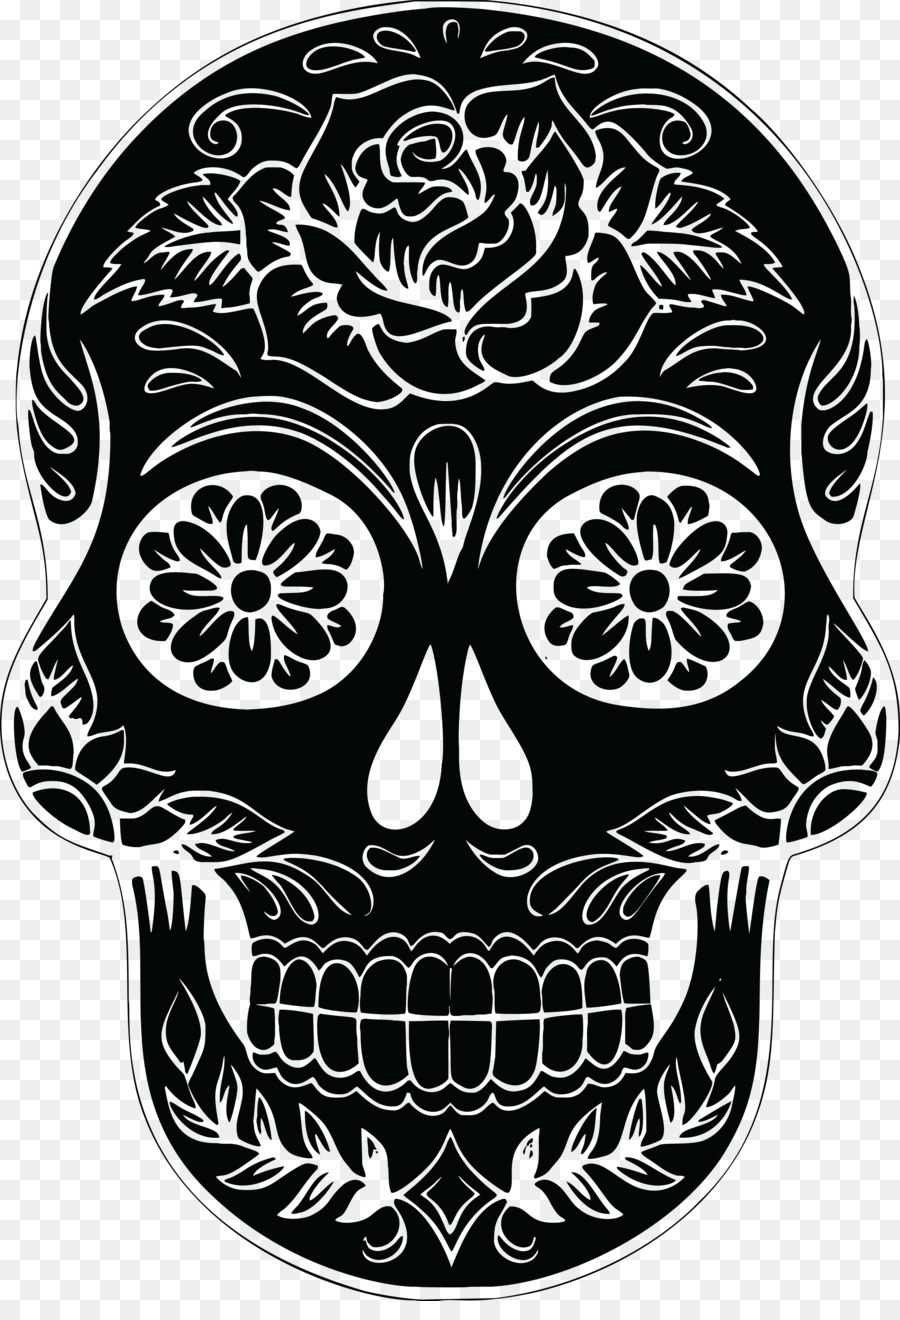 Calavera Skull Silhouette Clip art - skulls png download - 4000*5781 - Free Transparent Calavera png Download.